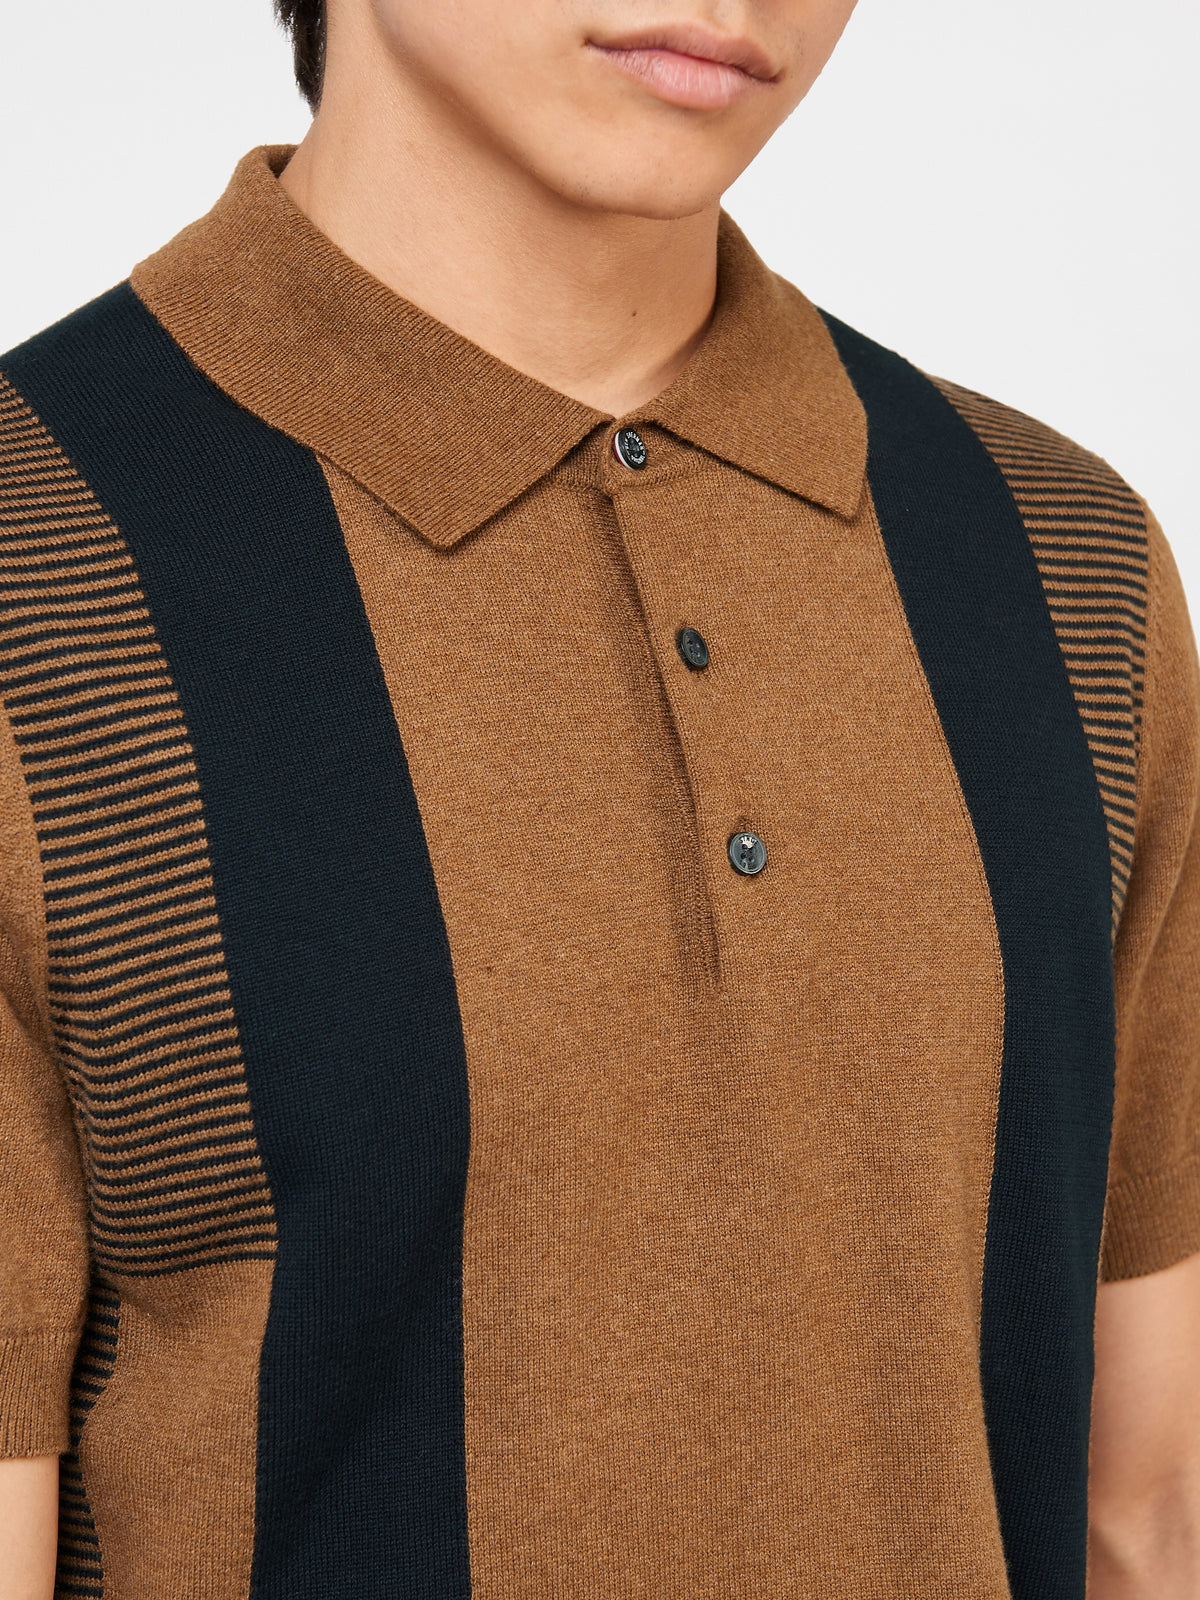 Ben Sherman Mens Inarsia Stripe Knit Polo Shirt, 02, 74196, Ginger